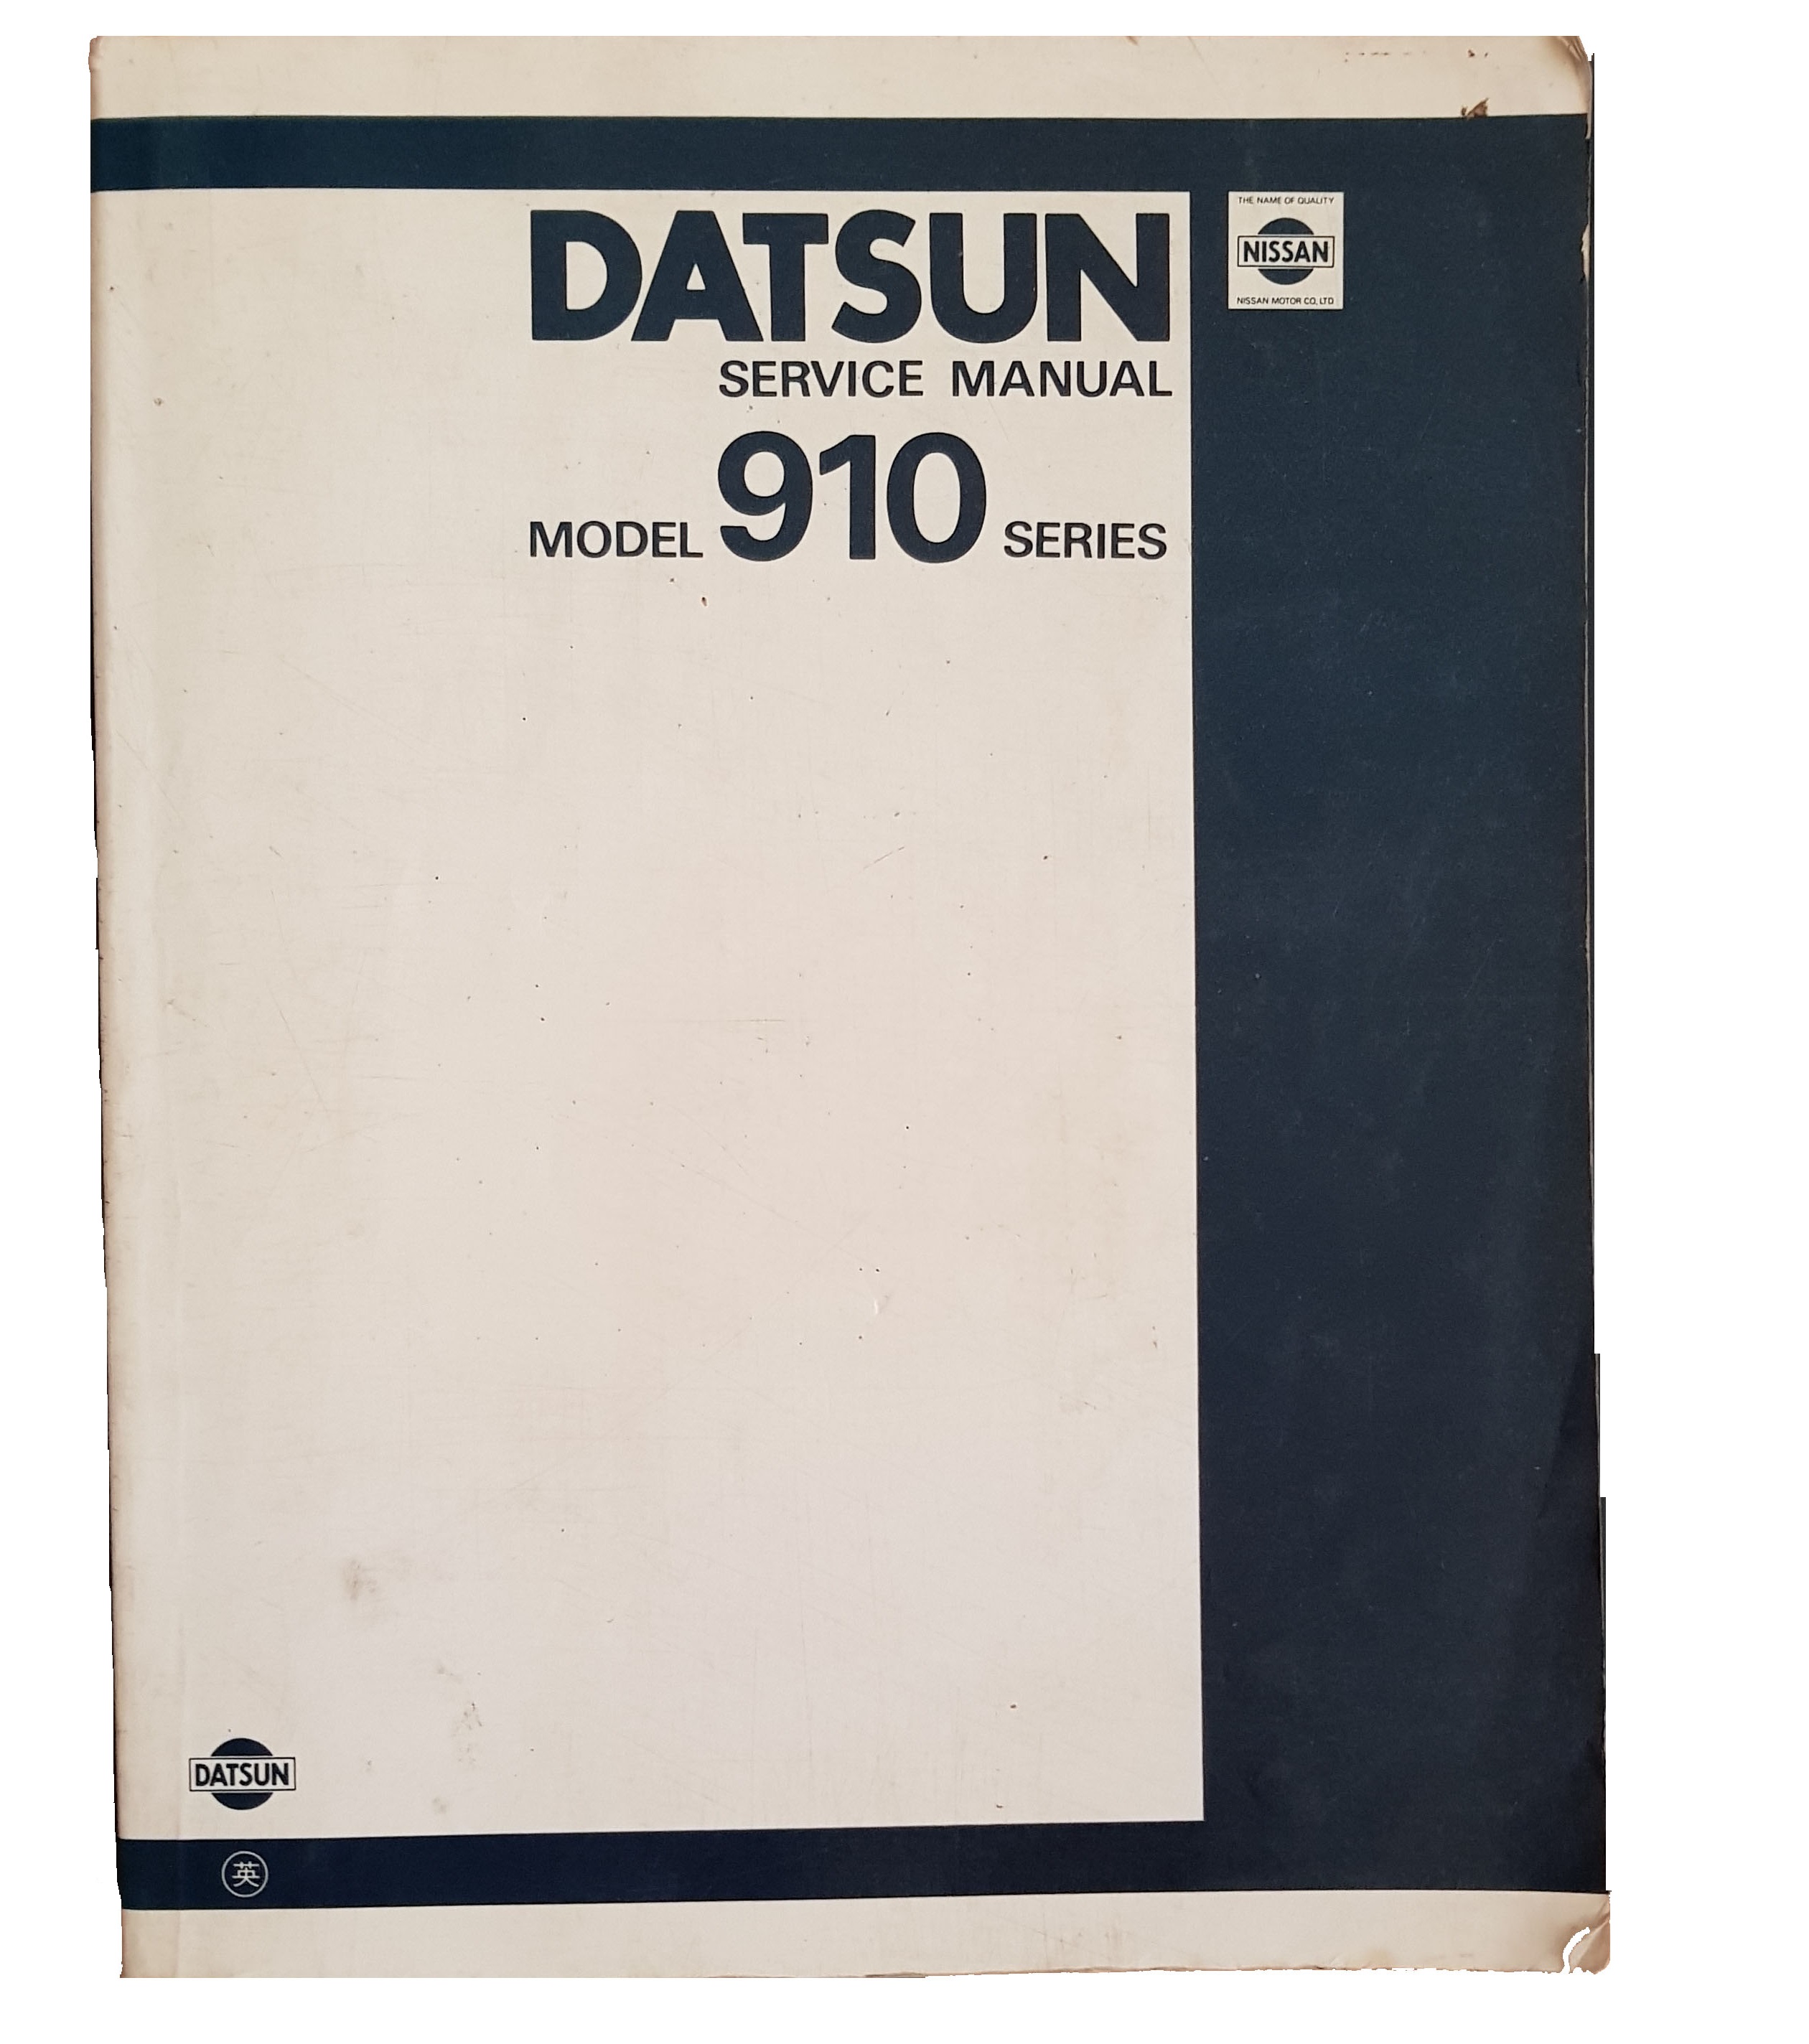 Nissan Datsun Model 910 Series Service Manual eBay